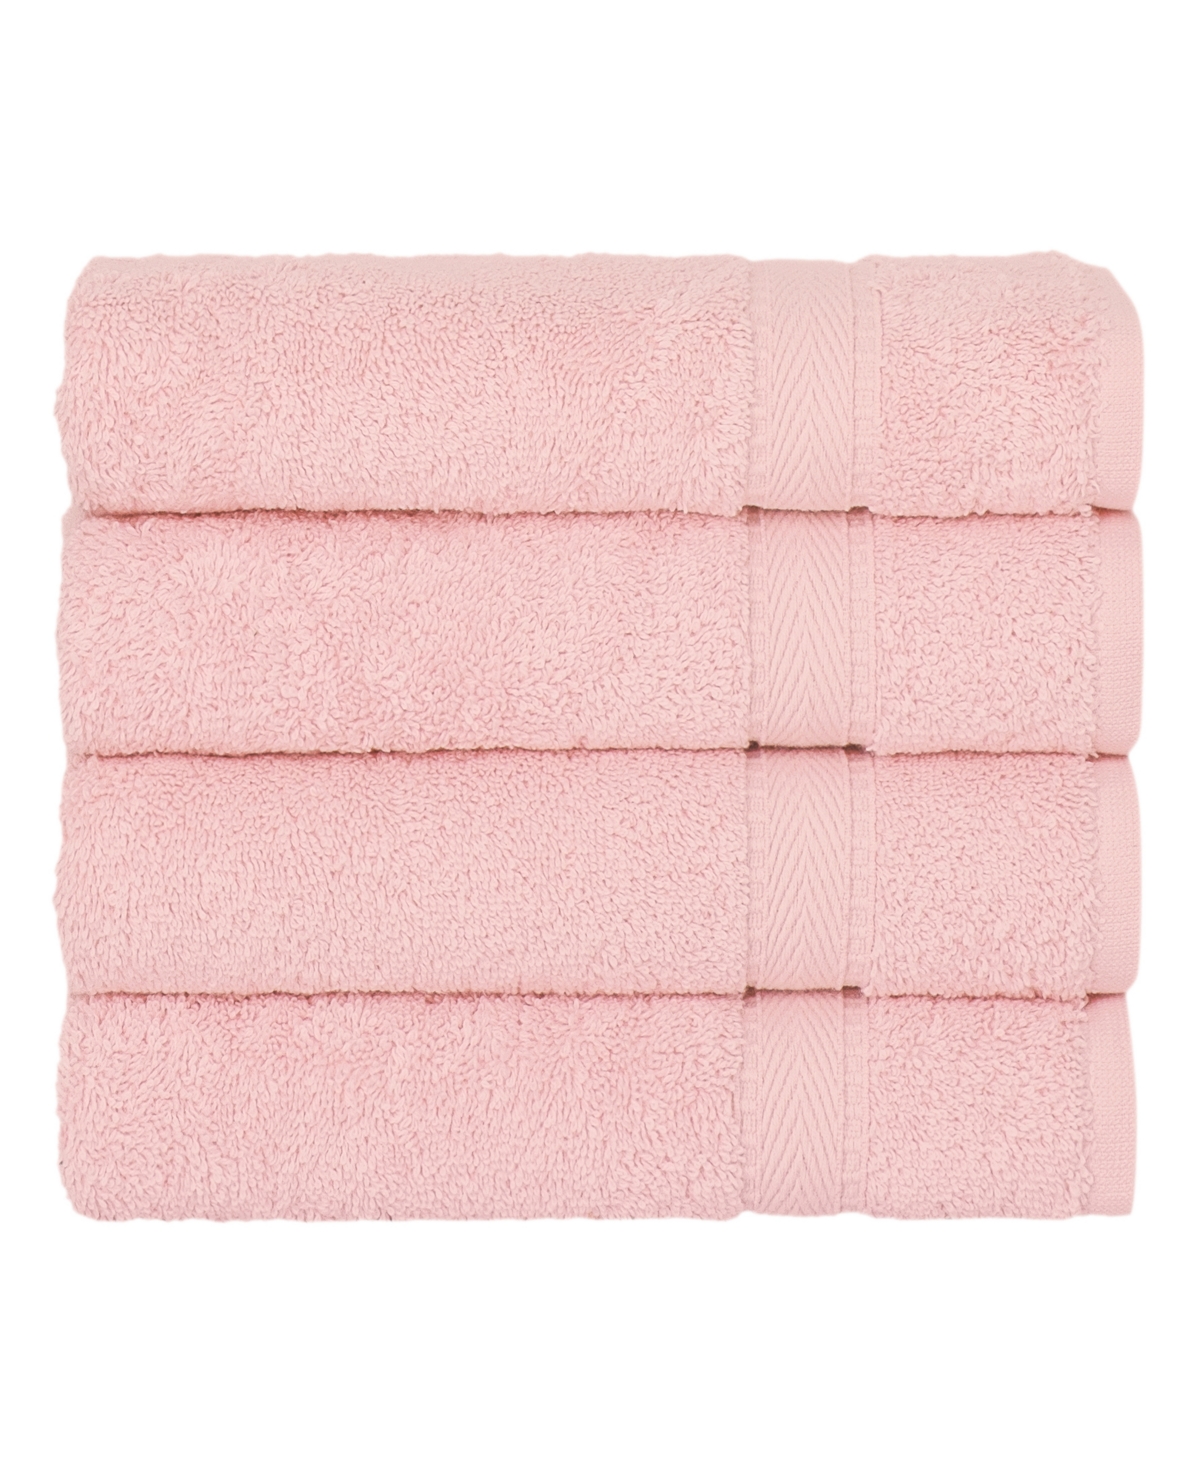 Linum Home Sinemis 4-pc. Hand Towel Set In Pink